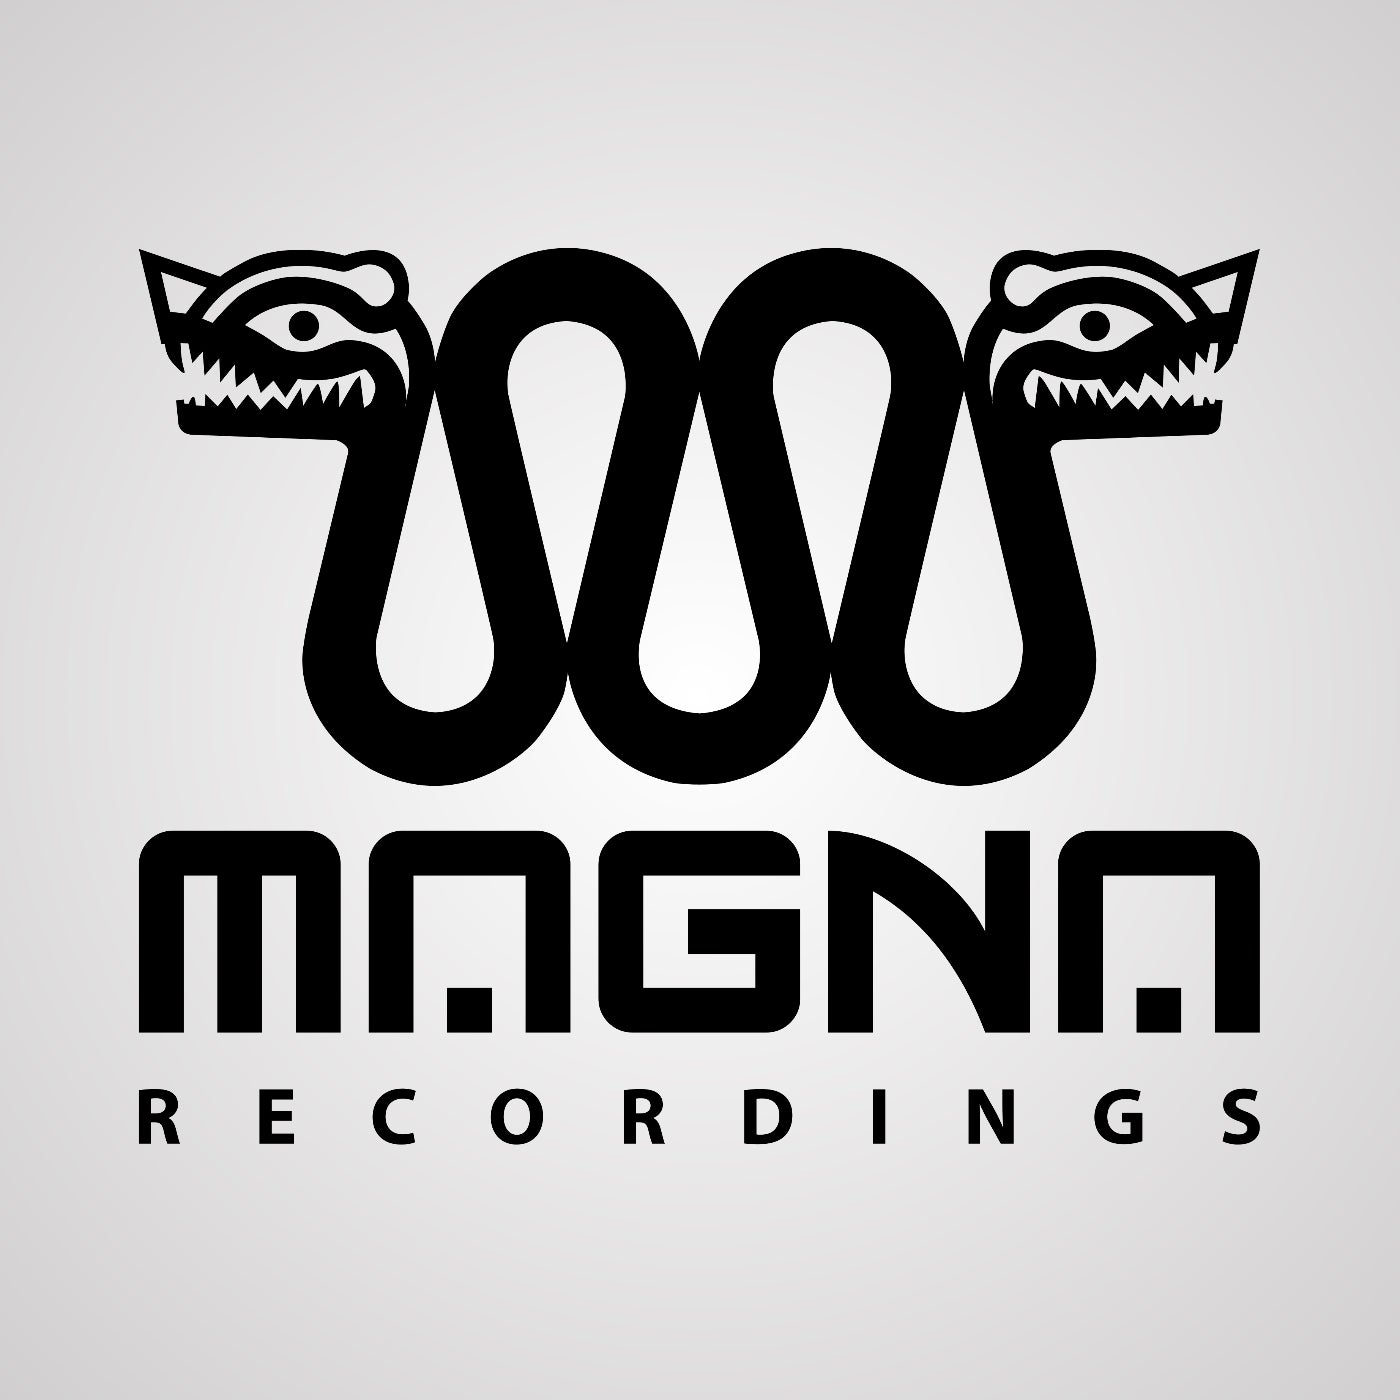 Zancozumbada - The Magna Remixes